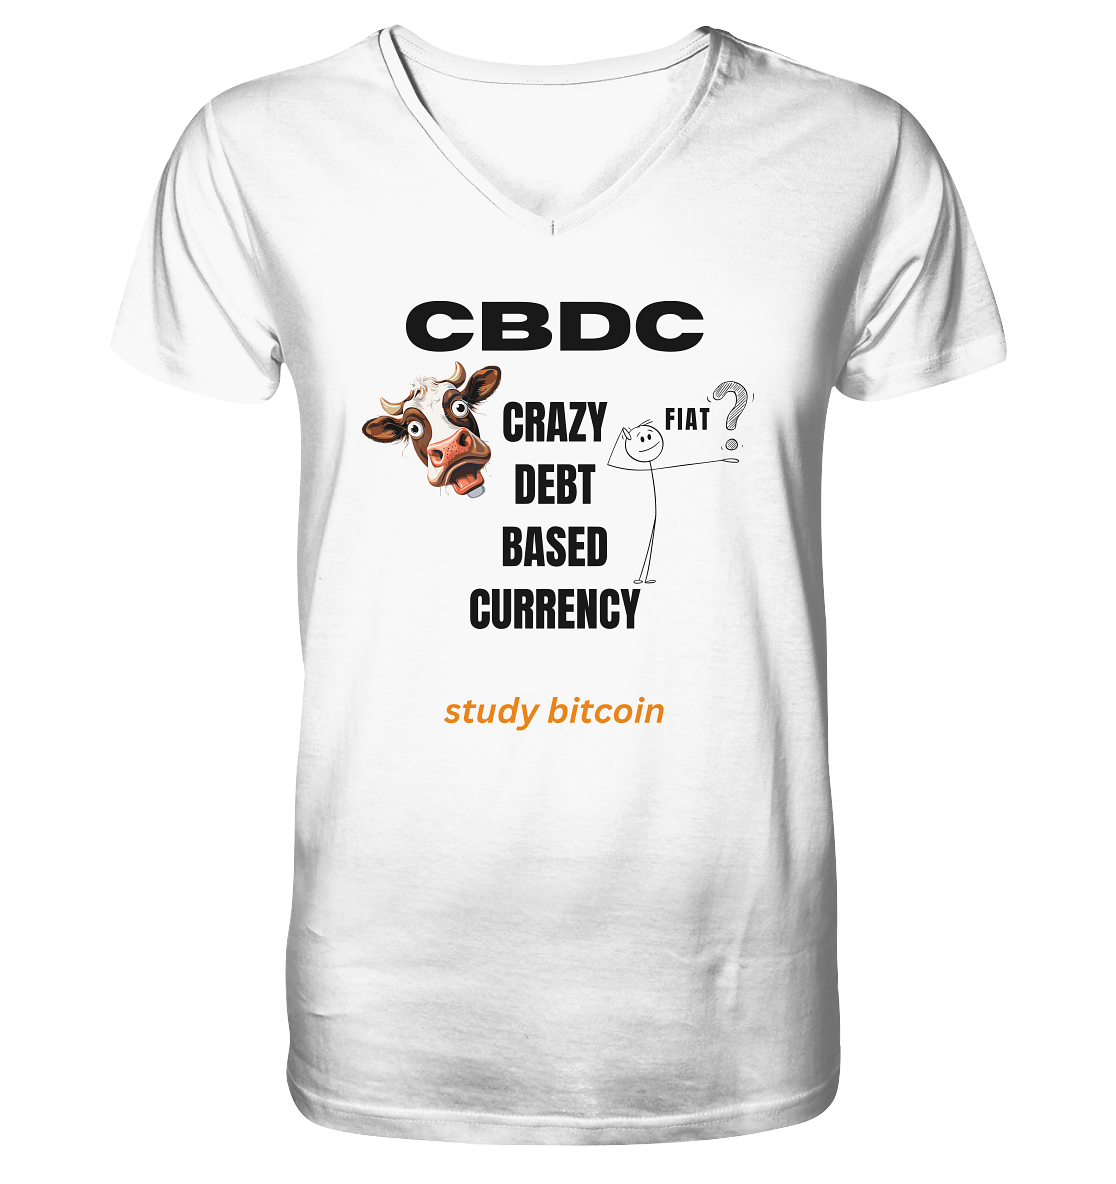 CBDC - CRAZY DEBT BASED CURRENCY - FIAT ? study bitcoin - Mens Organic V-Neck Shirt